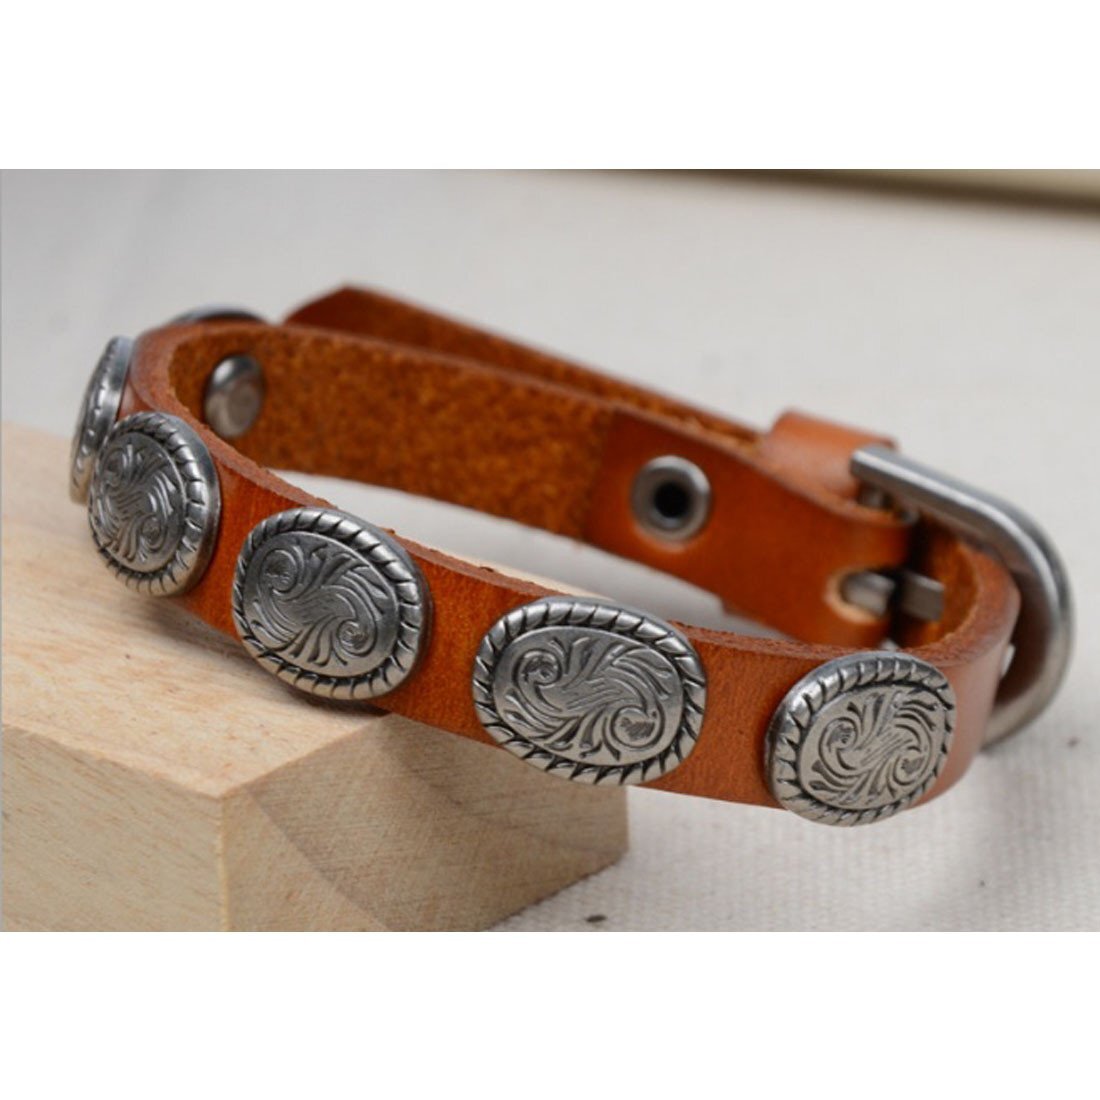 COLOR: DARK BROWN - WRANGLER Vintage Look Genuine Leather Bracelet